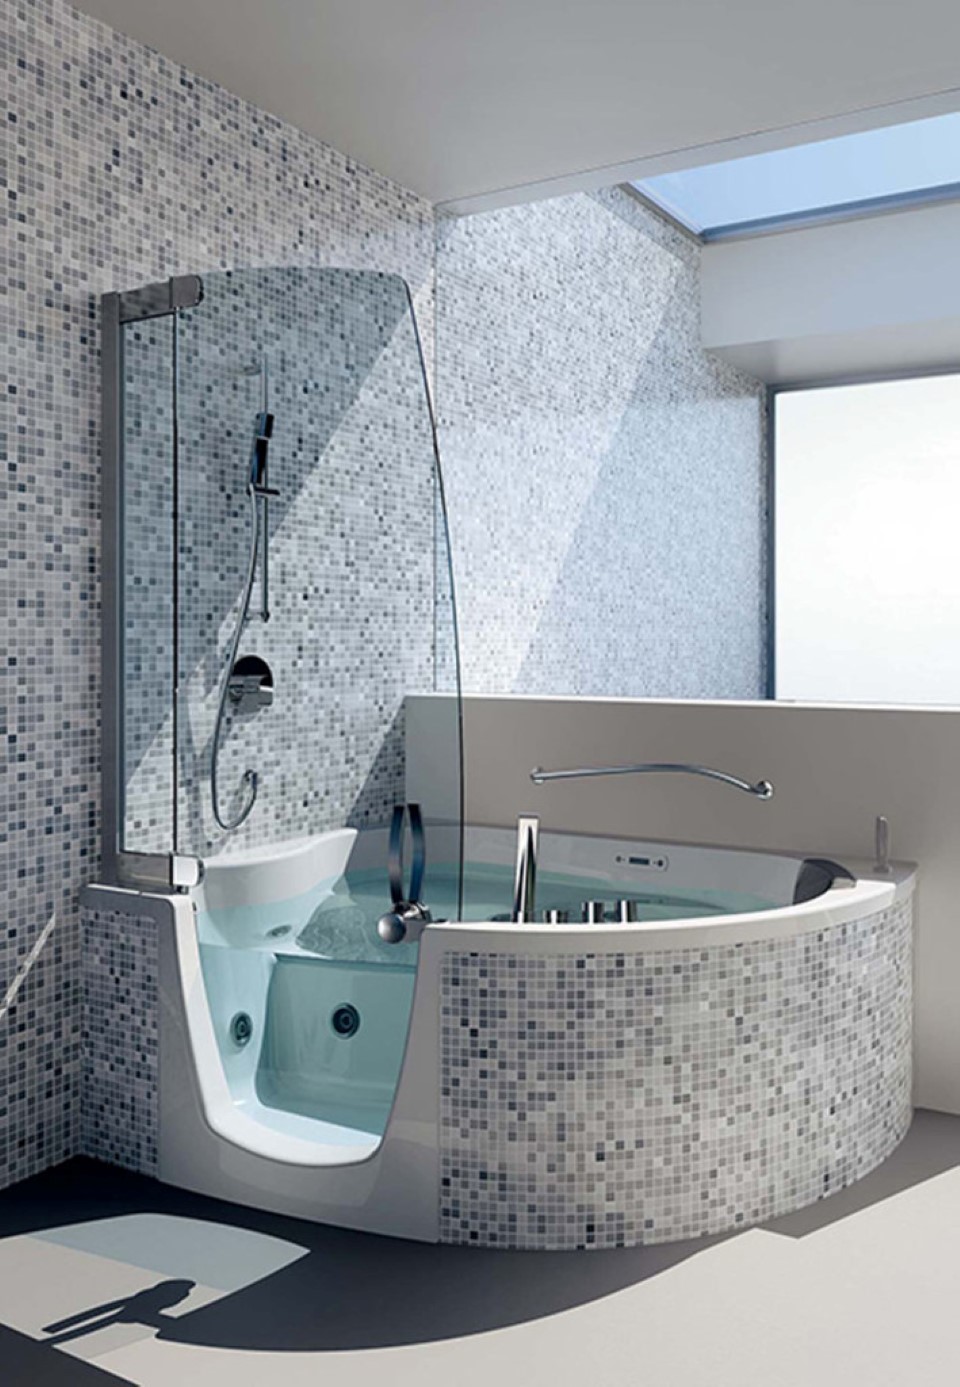 amazing-mosaic-backsplash-tile-and-large-skylights-design-above-ultra-modern-corner-shower-bathroom-shower-ideas